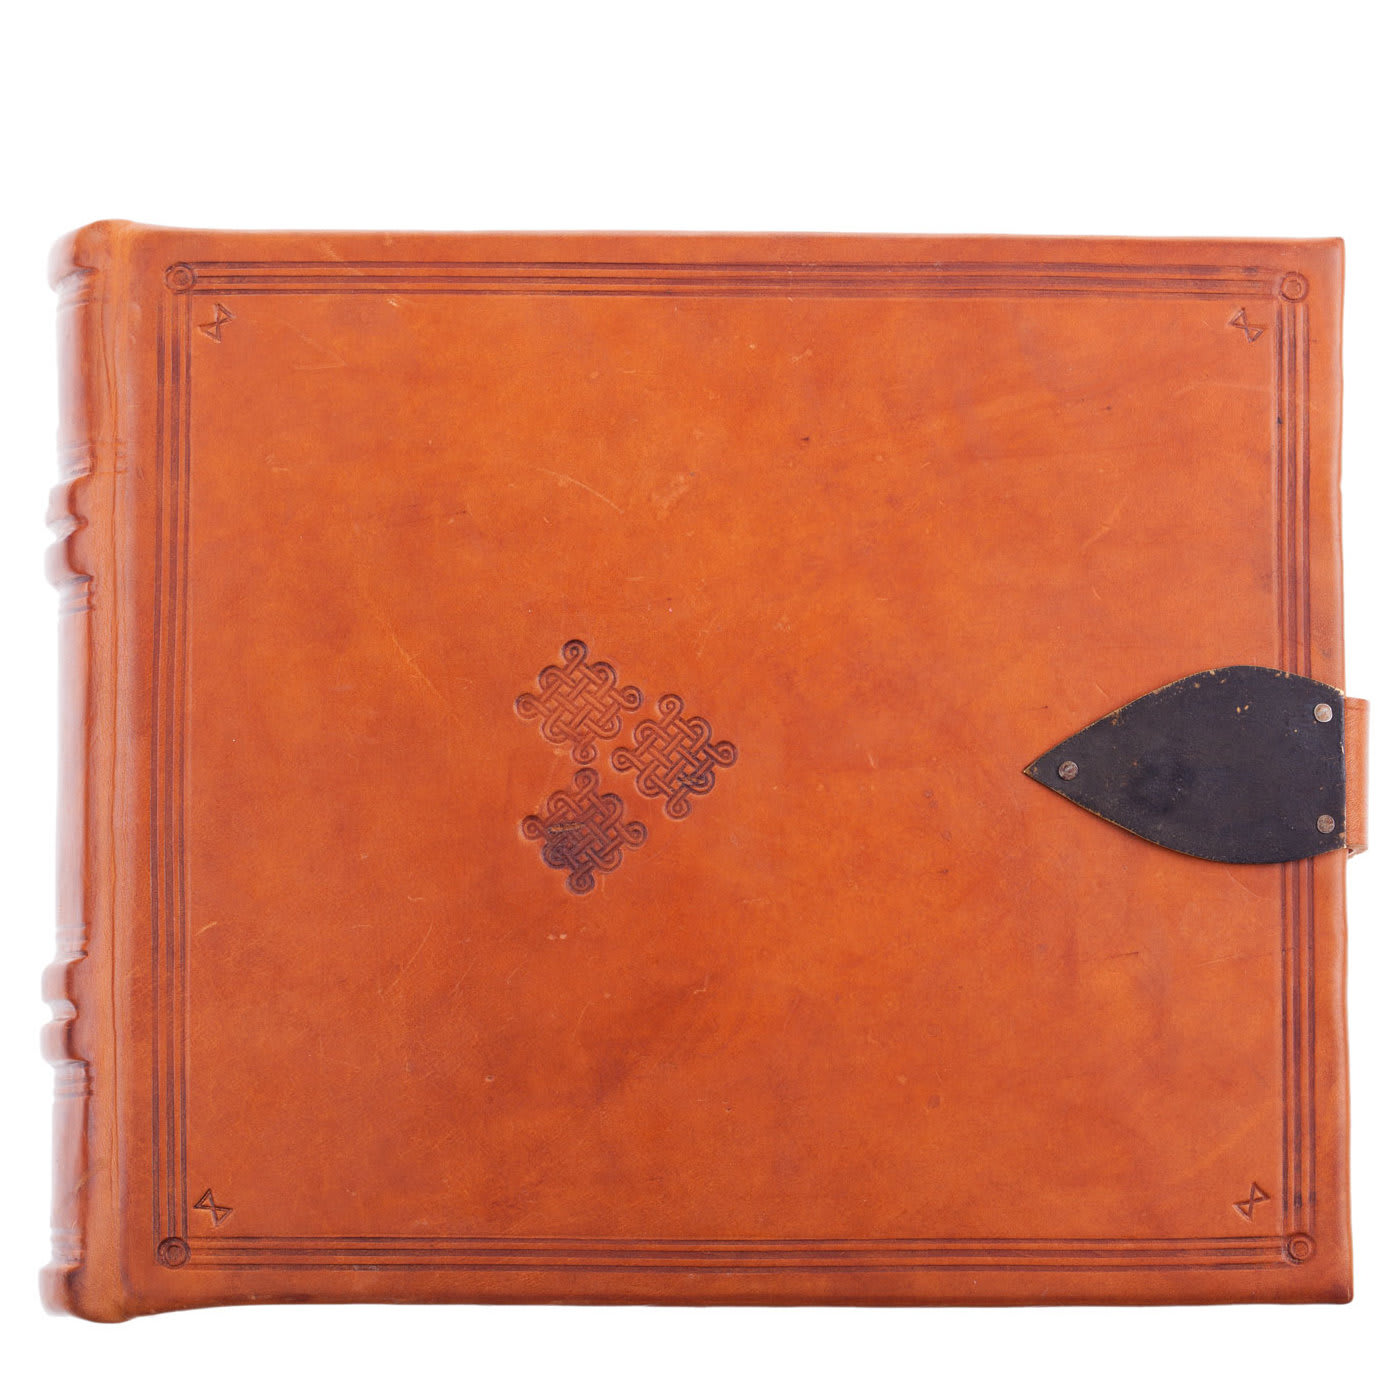 Monastico Landsape Leather Book - Giannini